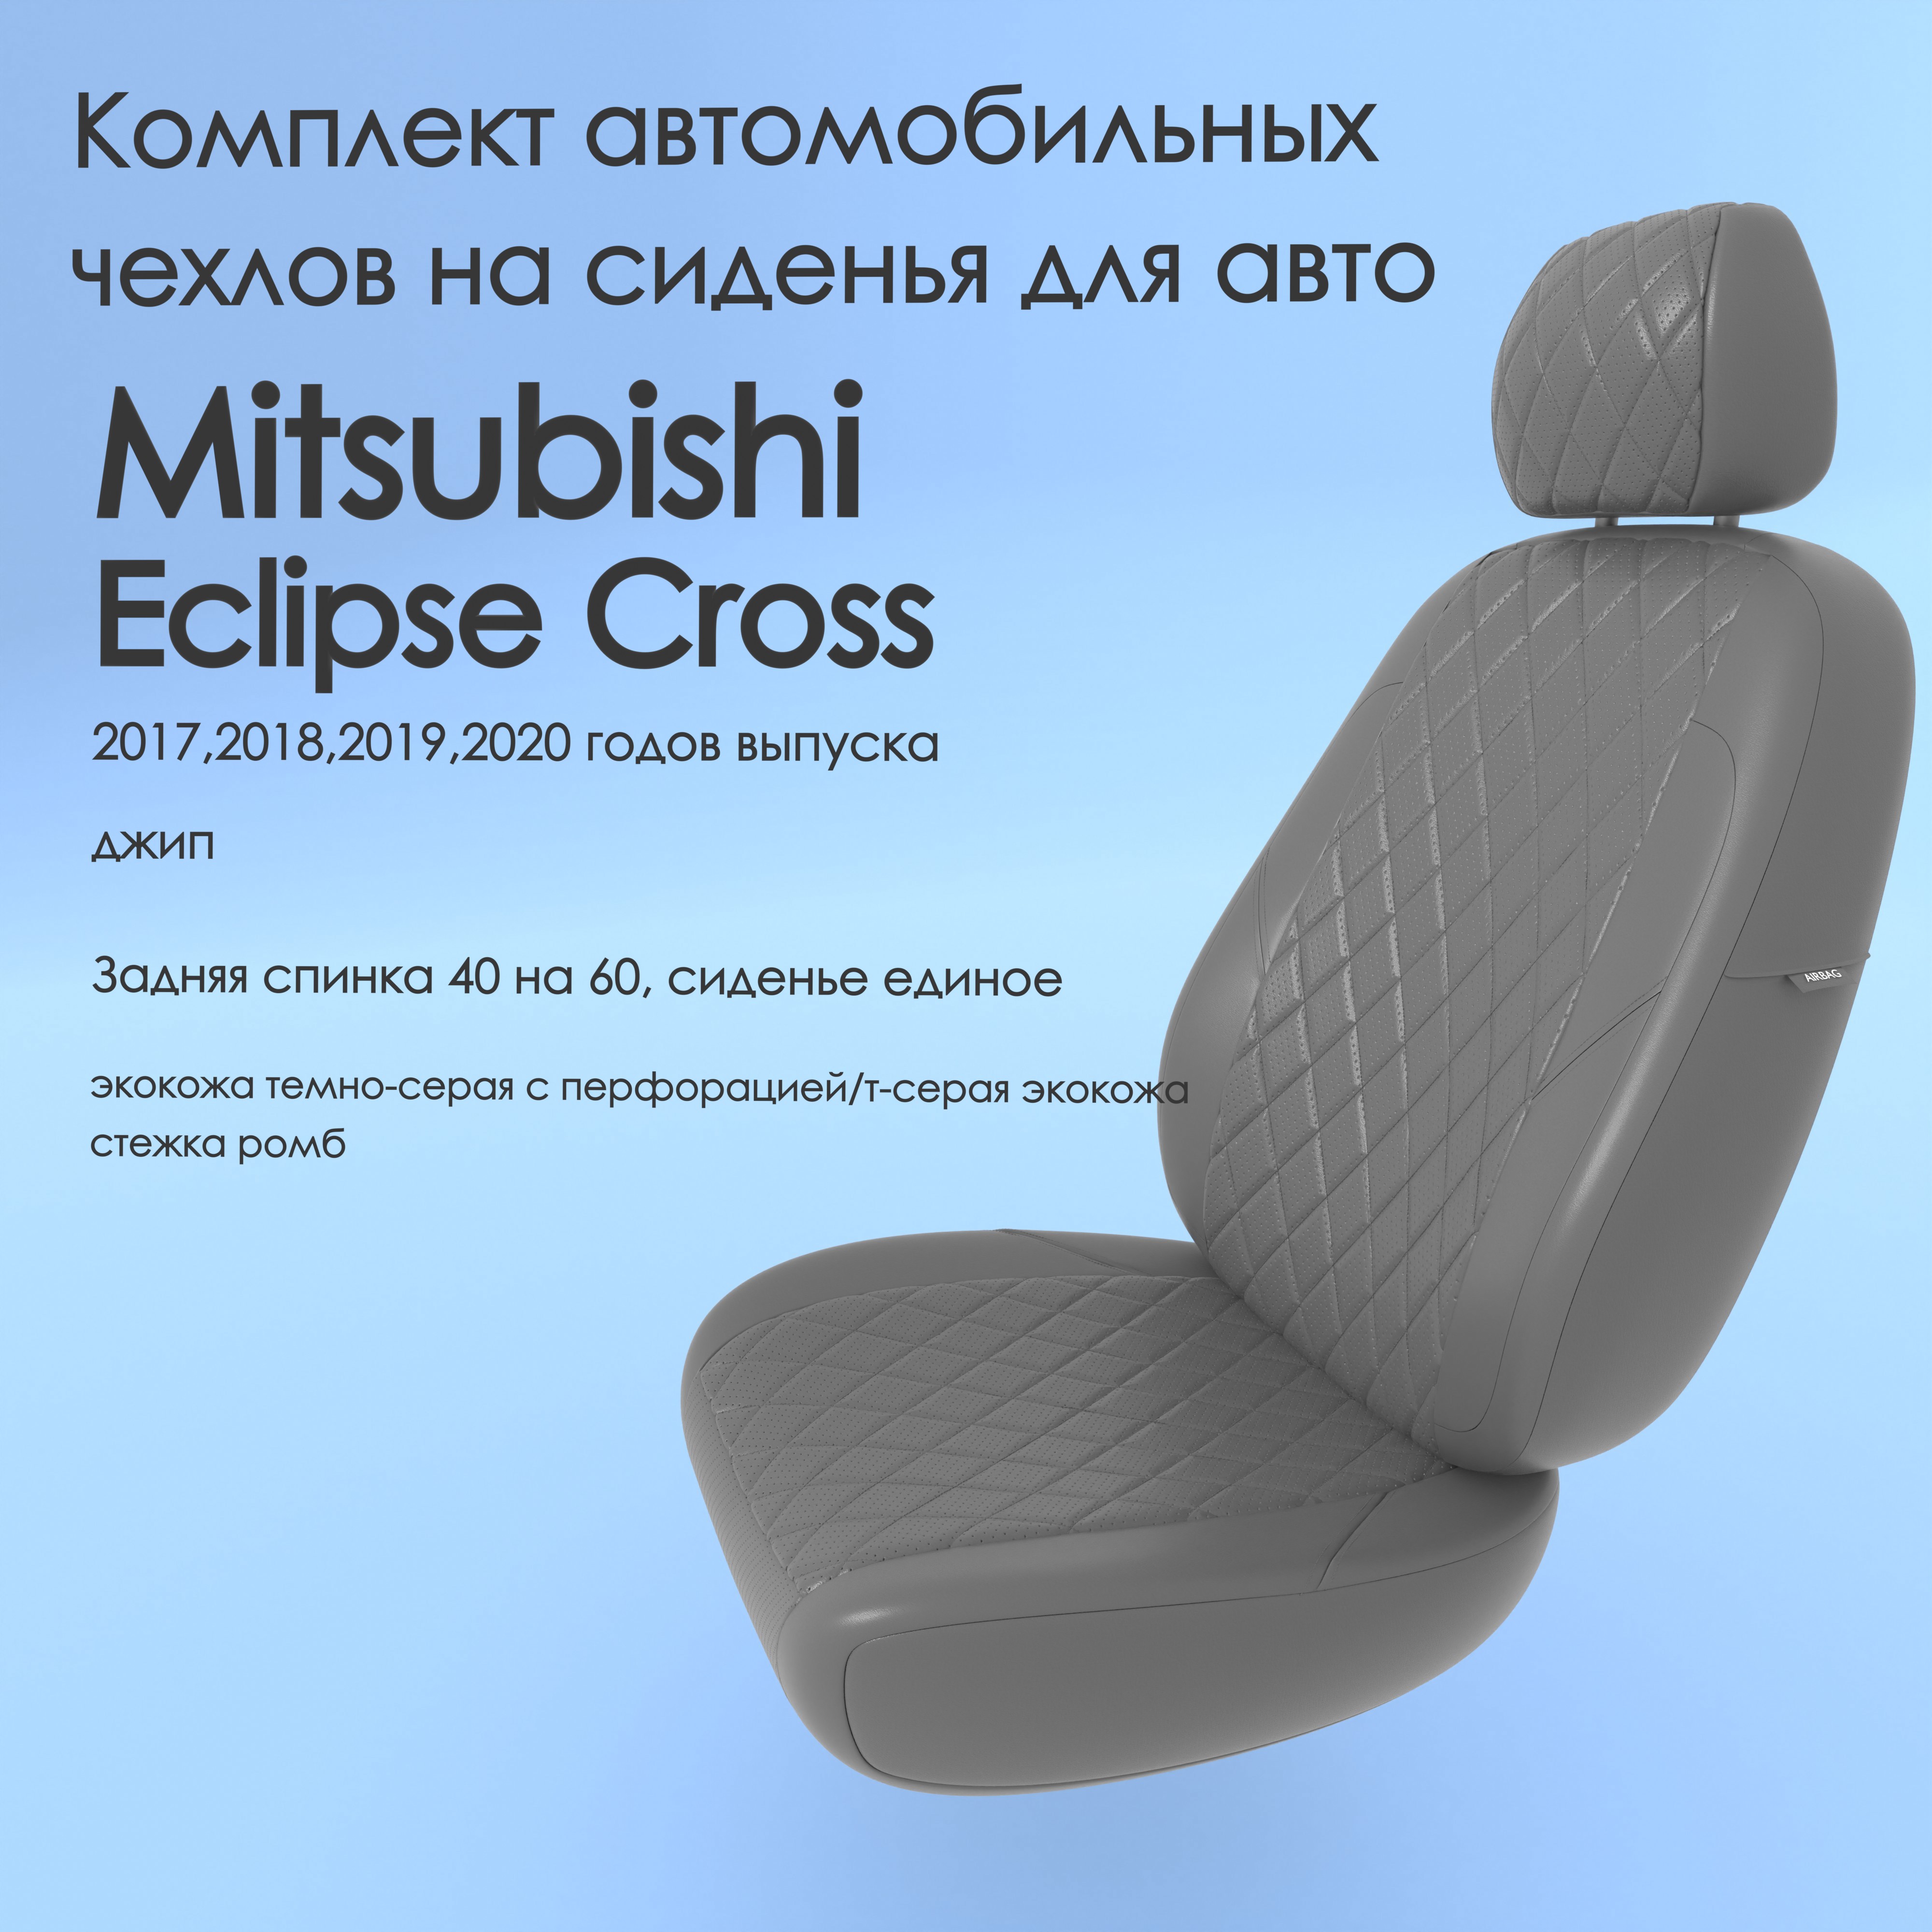 Чехлы Чехломания Mitsubishi Eclipse Cross 2017,2018,2019,2020 джип 40/60 тсер-эк/р1